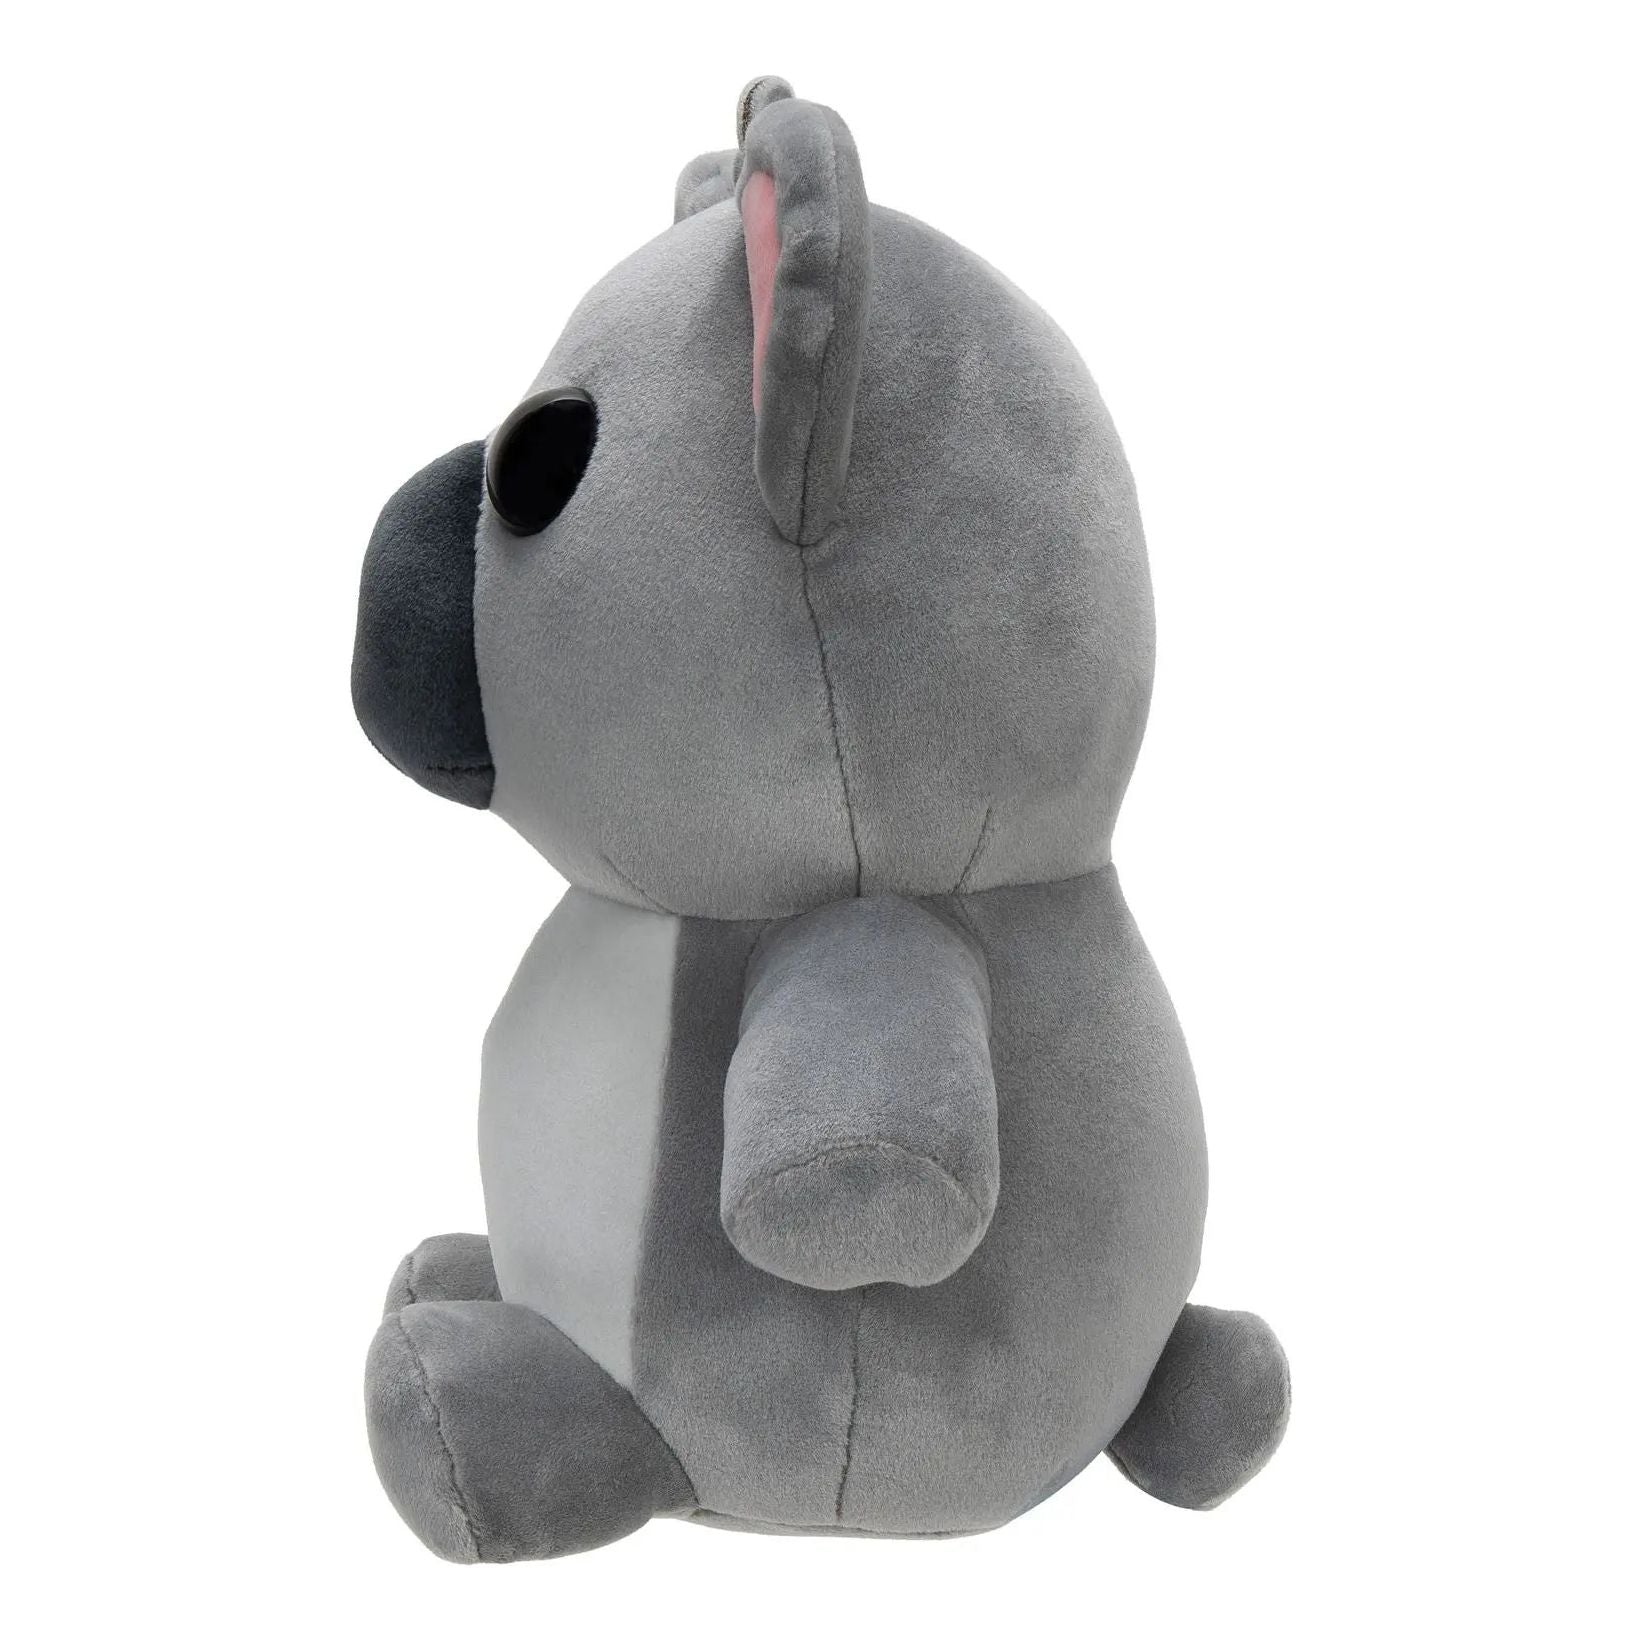 Adopt Me Collector Plush Koala Adopt Me